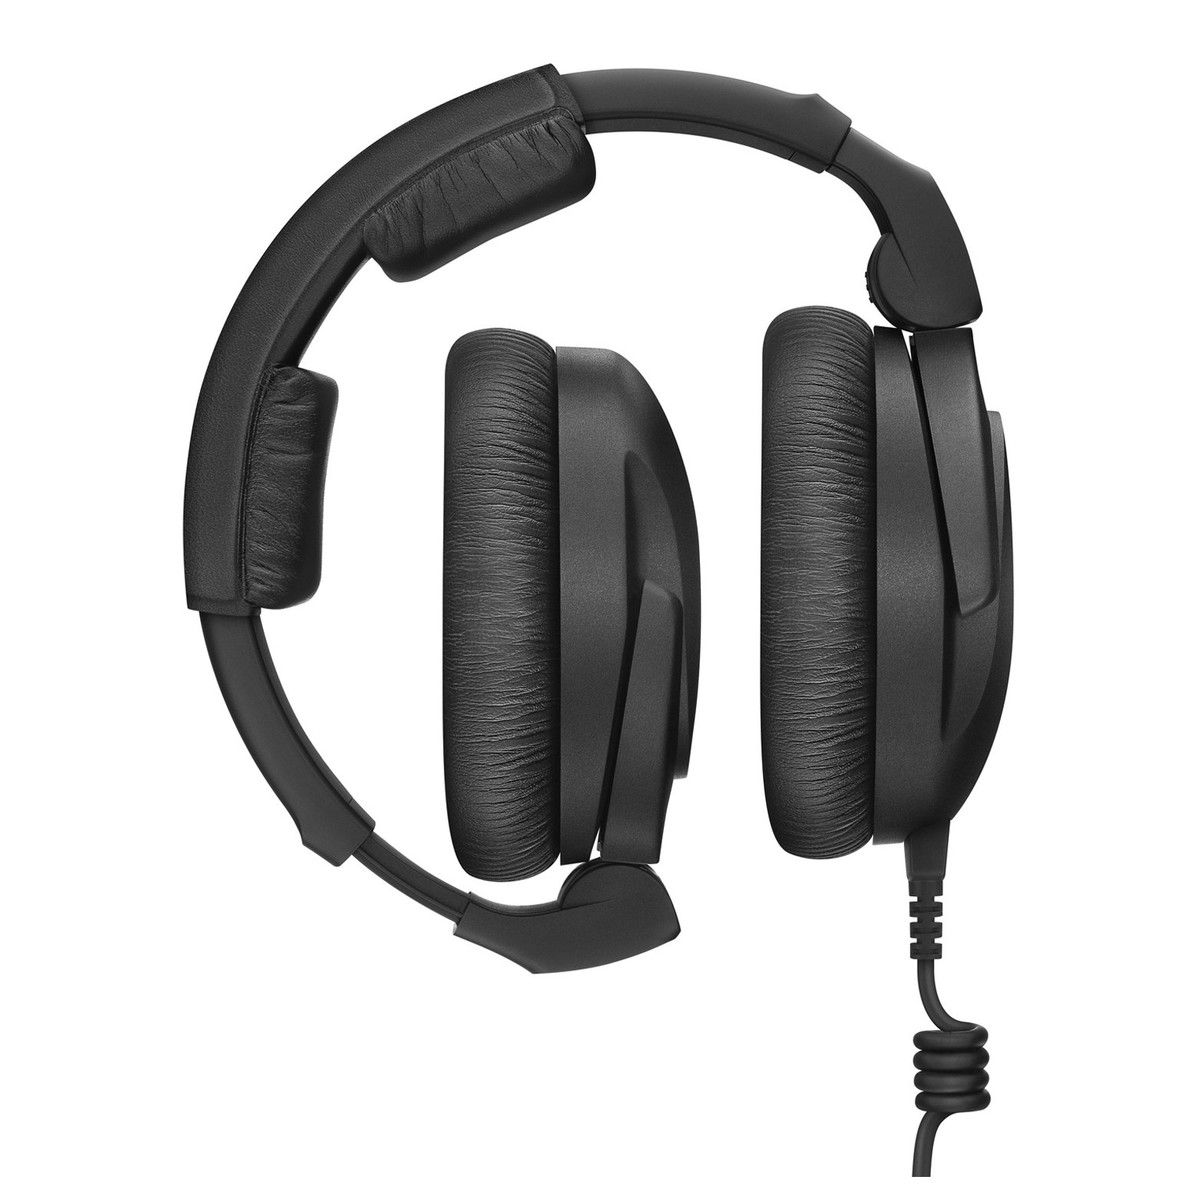 Sennheiser Hd300 Protect - Closed headset - Variation 1